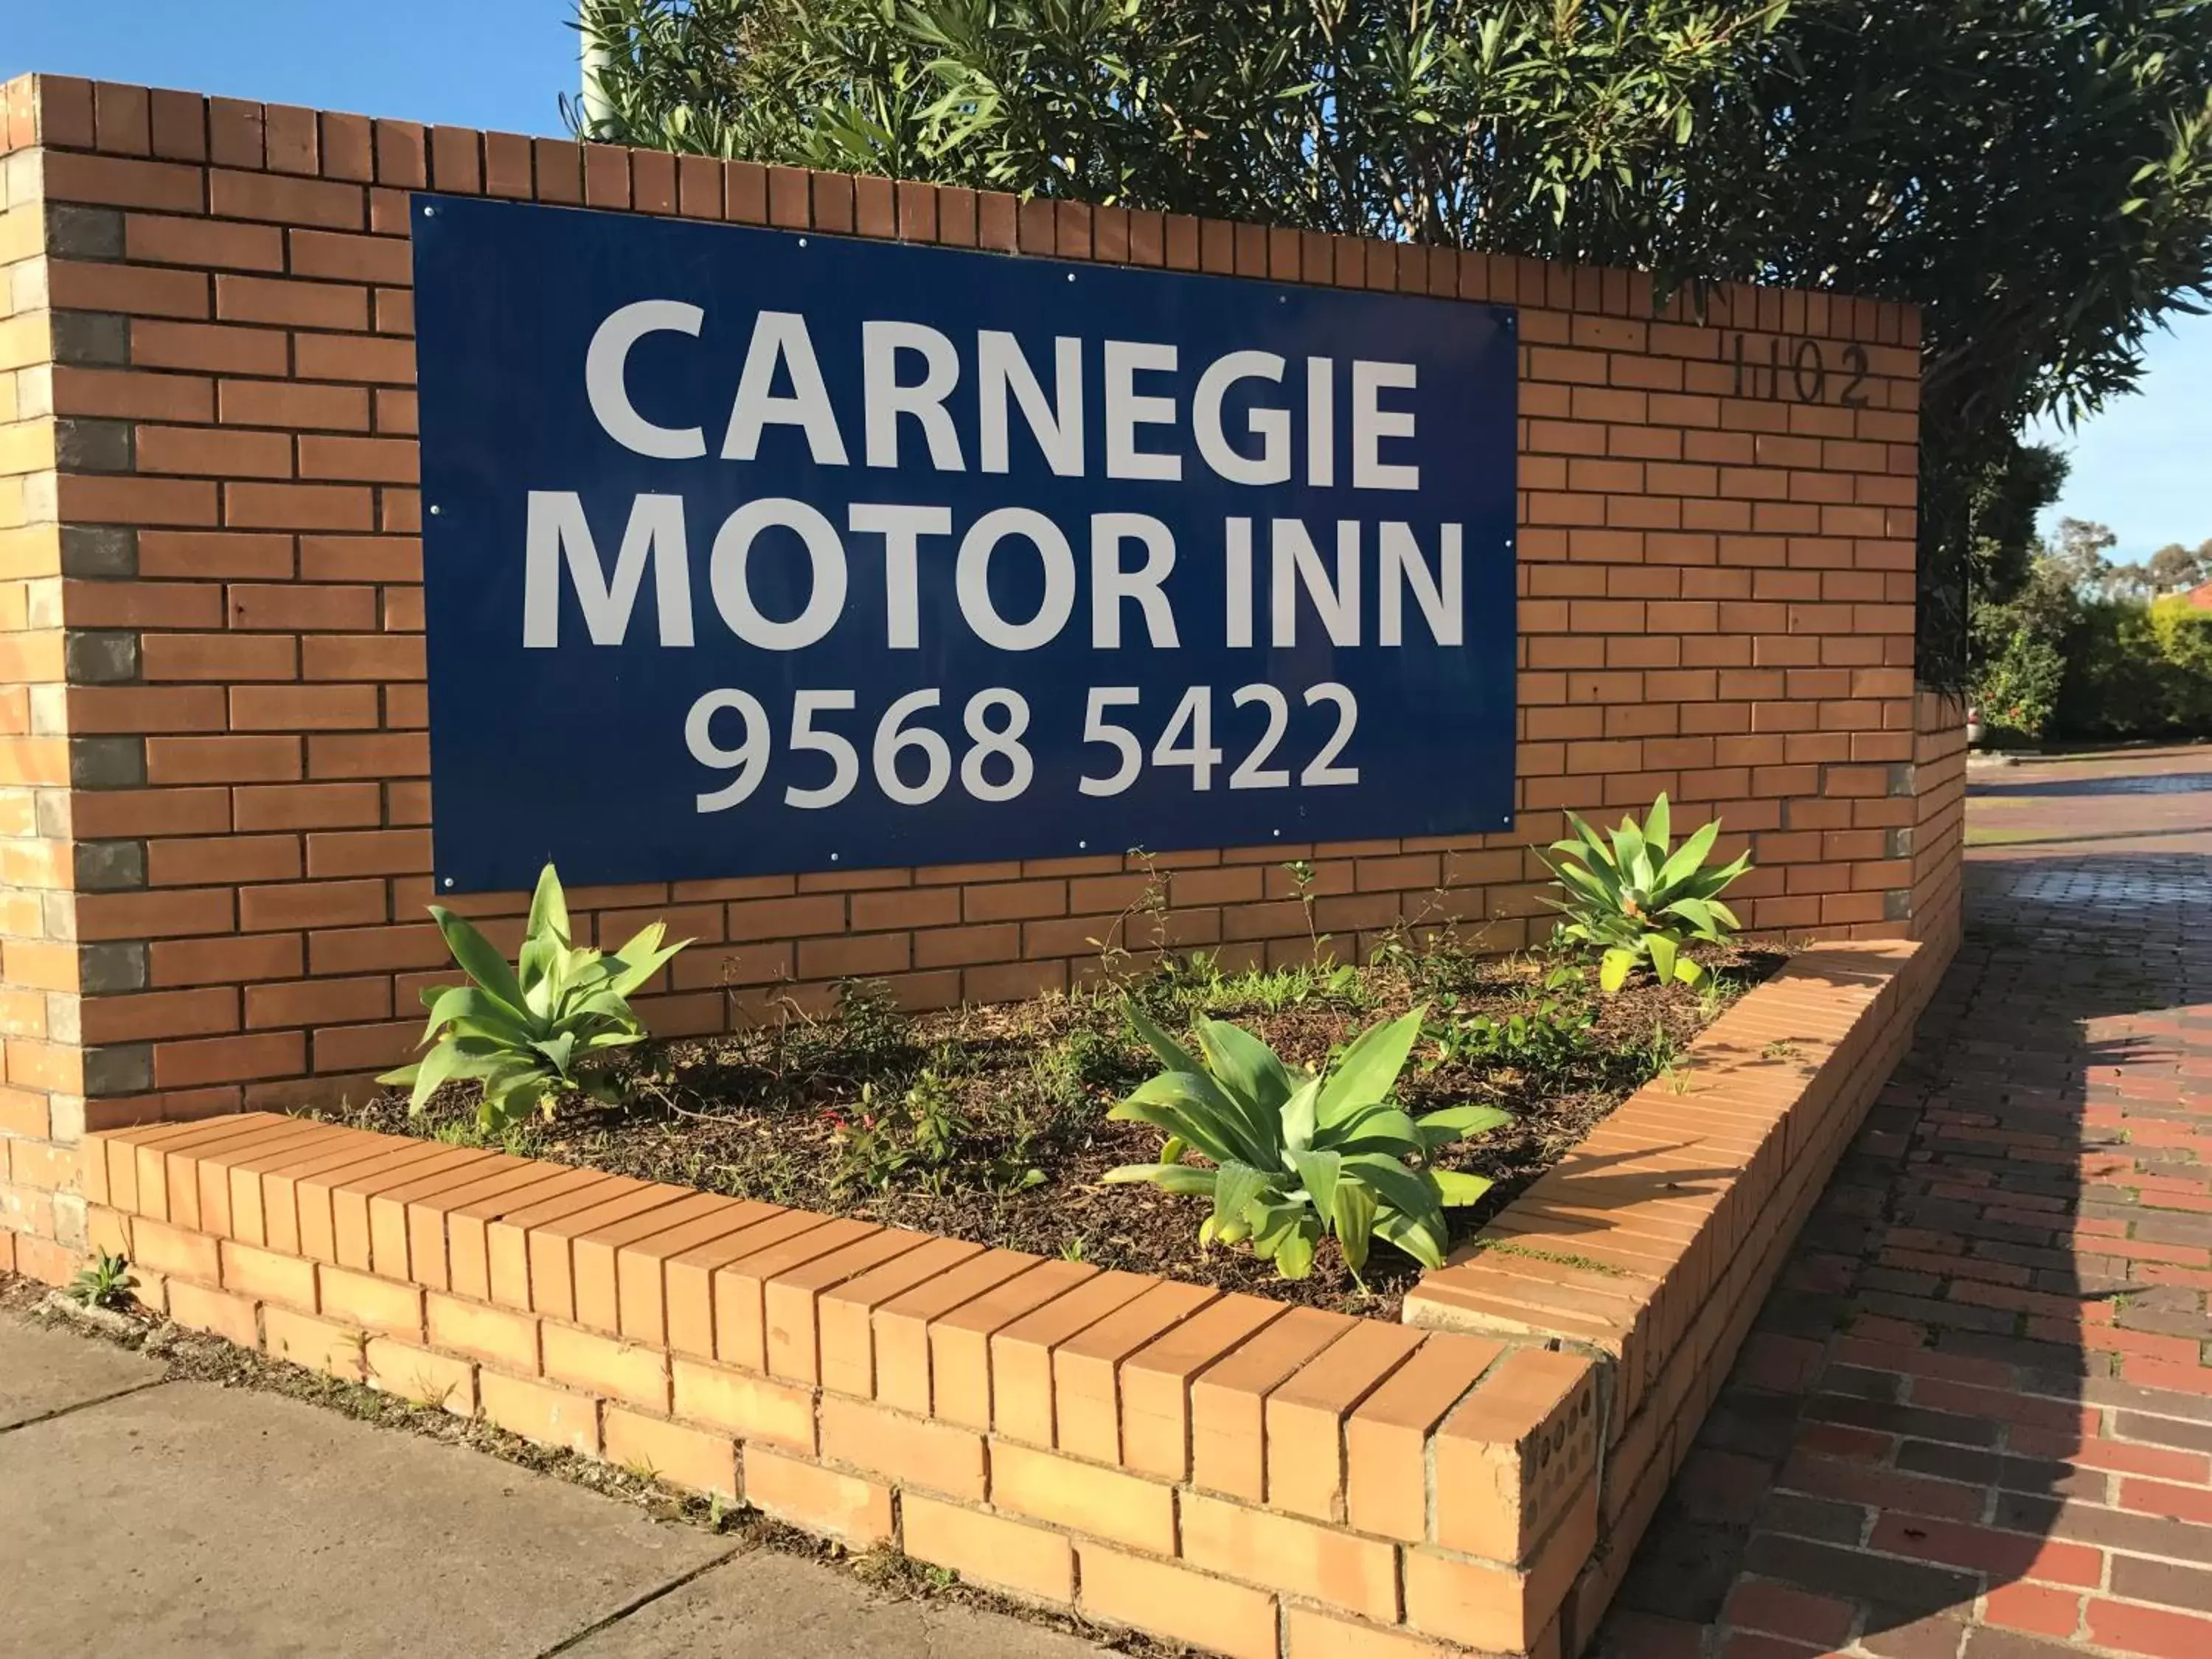 Property logo or sign in Carnegie Motor Inn